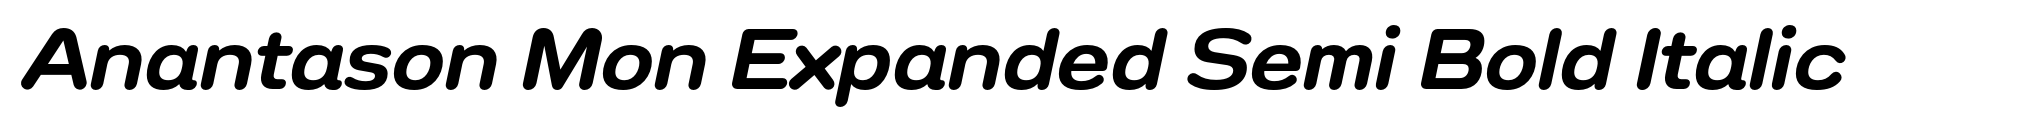 Anantason Mon Expanded Semi Bold Italic image